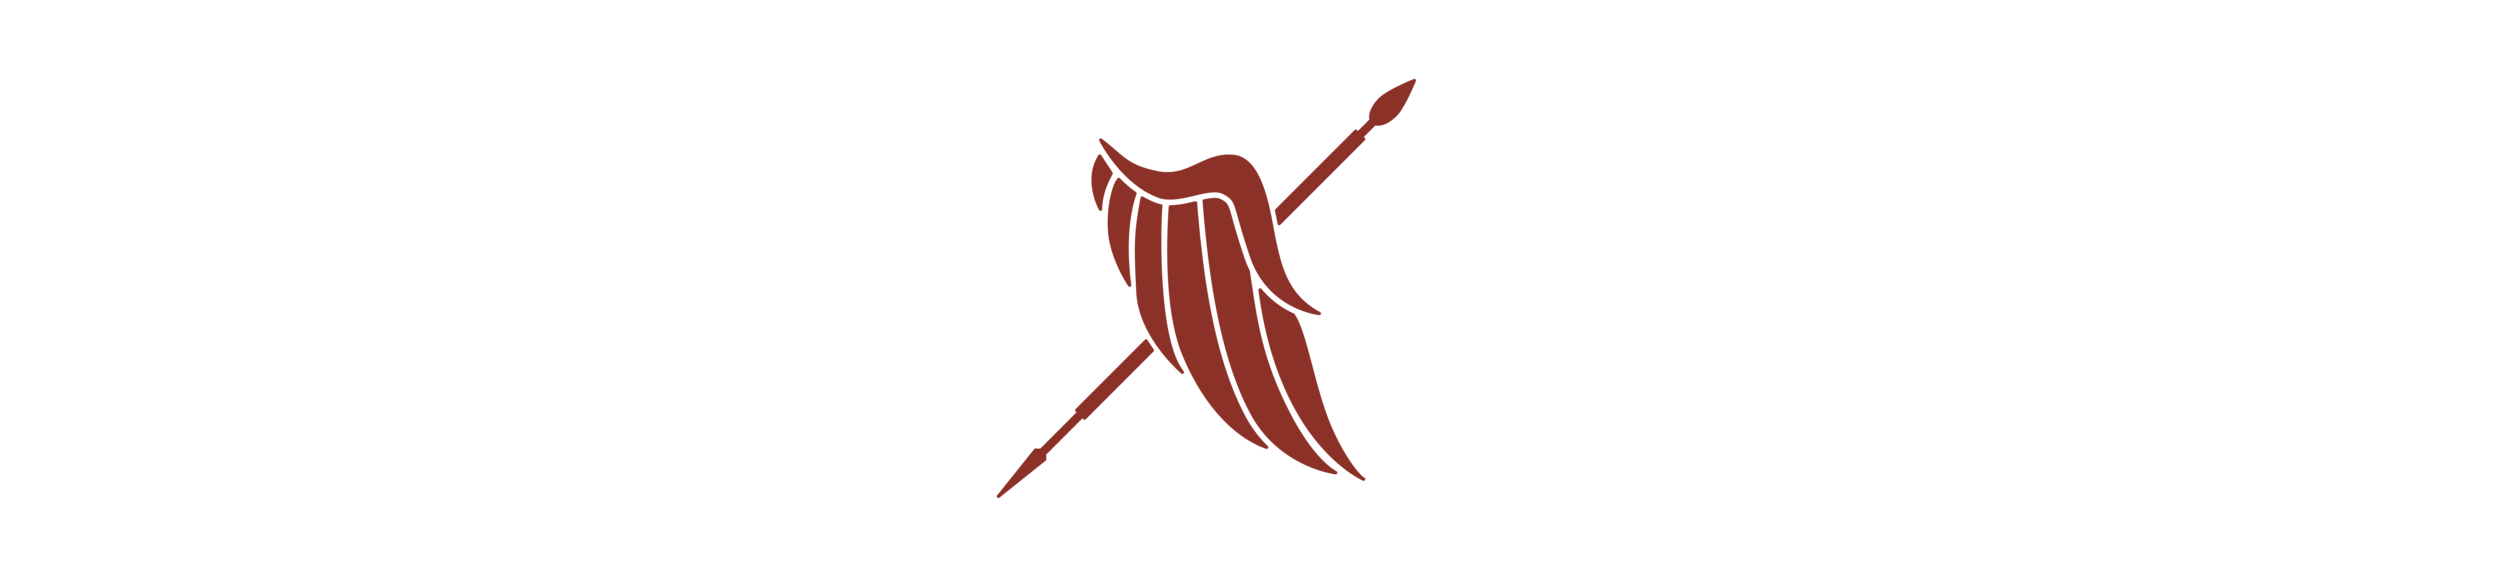 Pallas Fitness